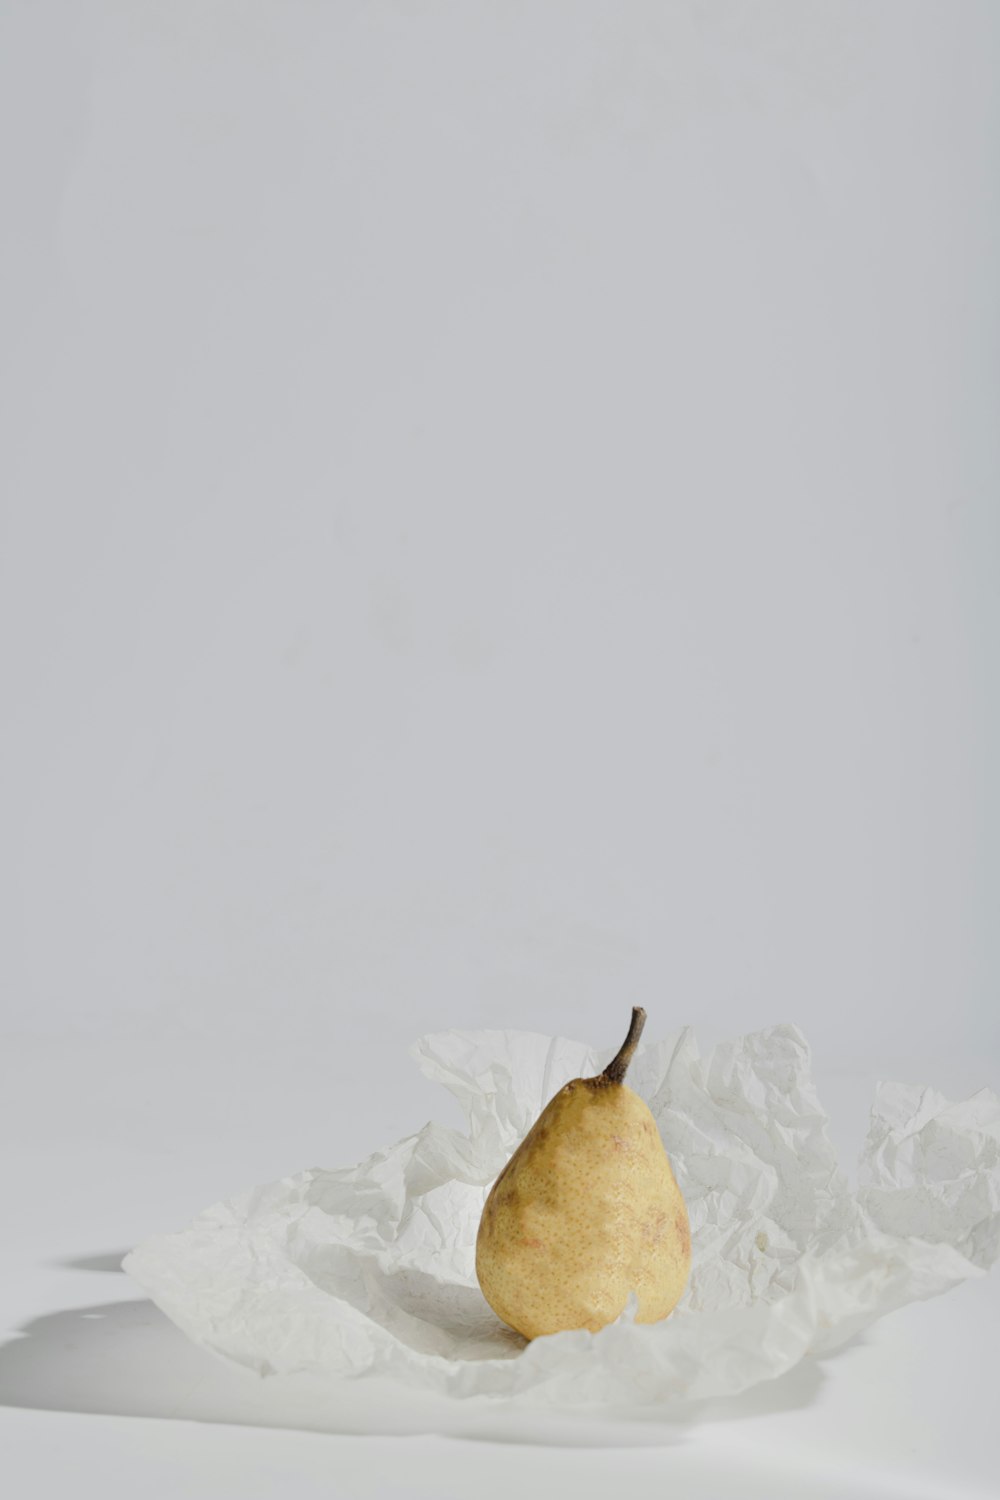 una patata su una superficie bianca